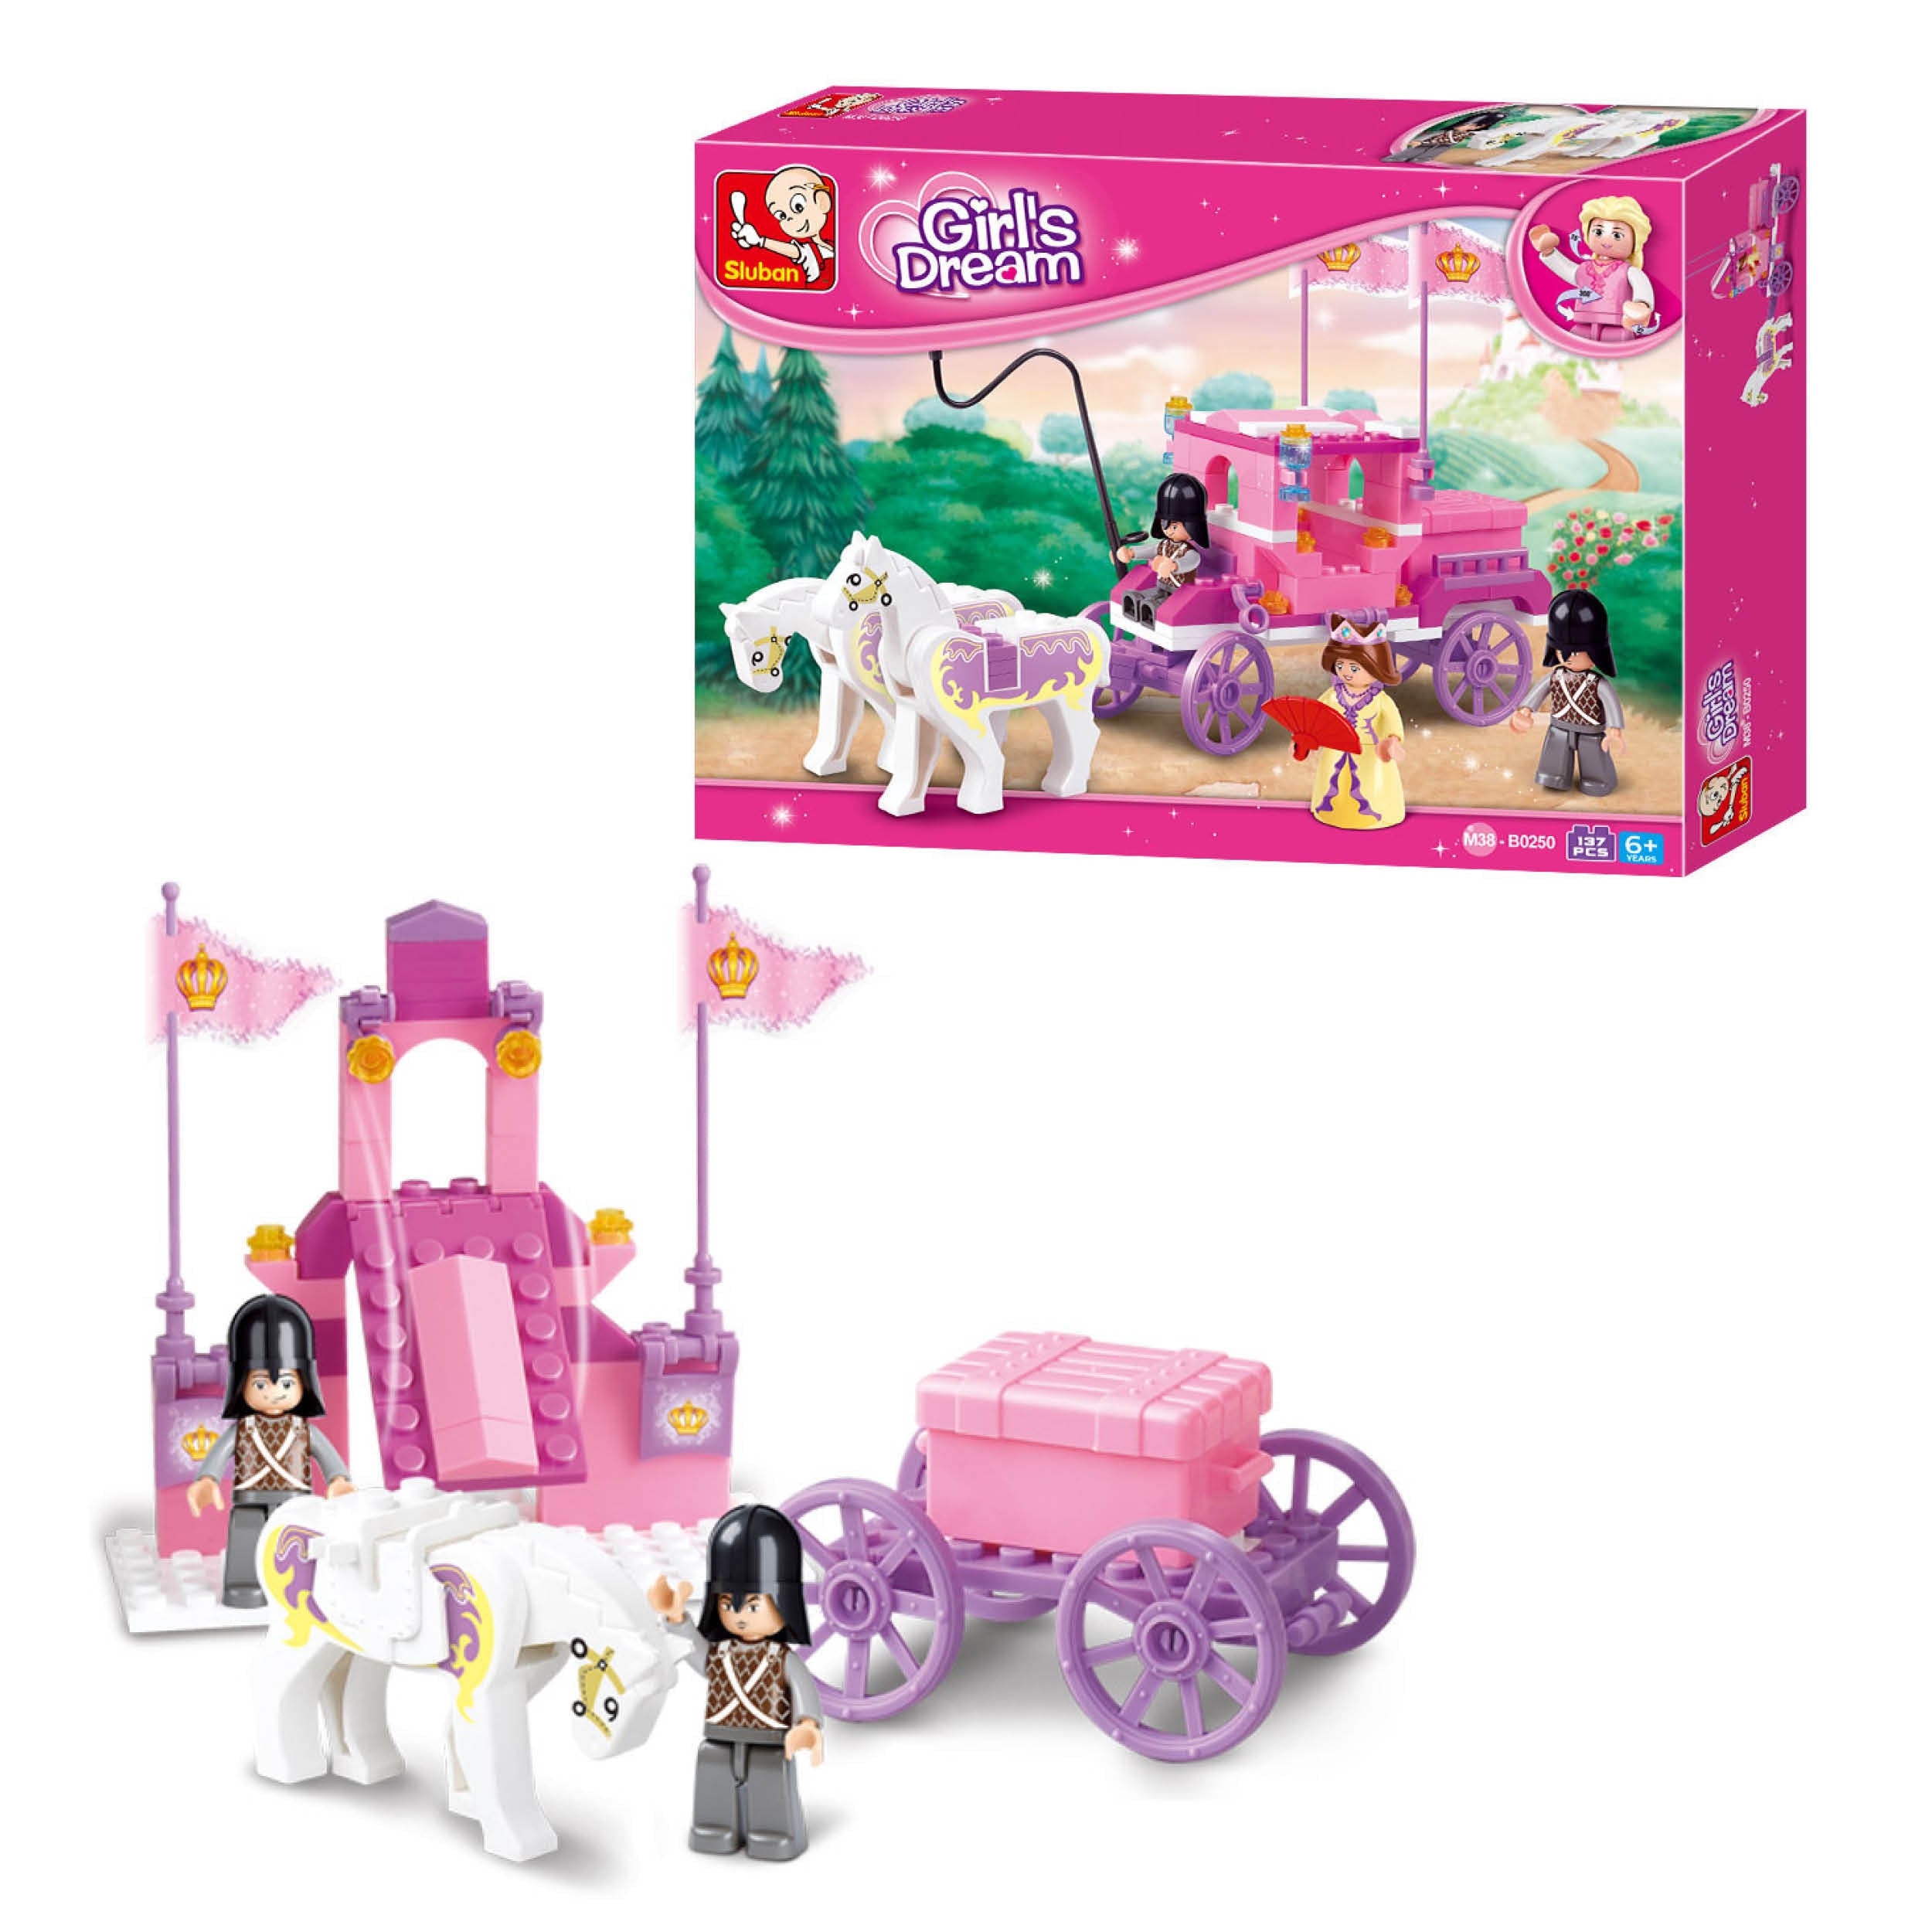 SLUBAN® The Royal Carriage (M38-B250) (137 Pieces) Building Blocks Kit For Girls 